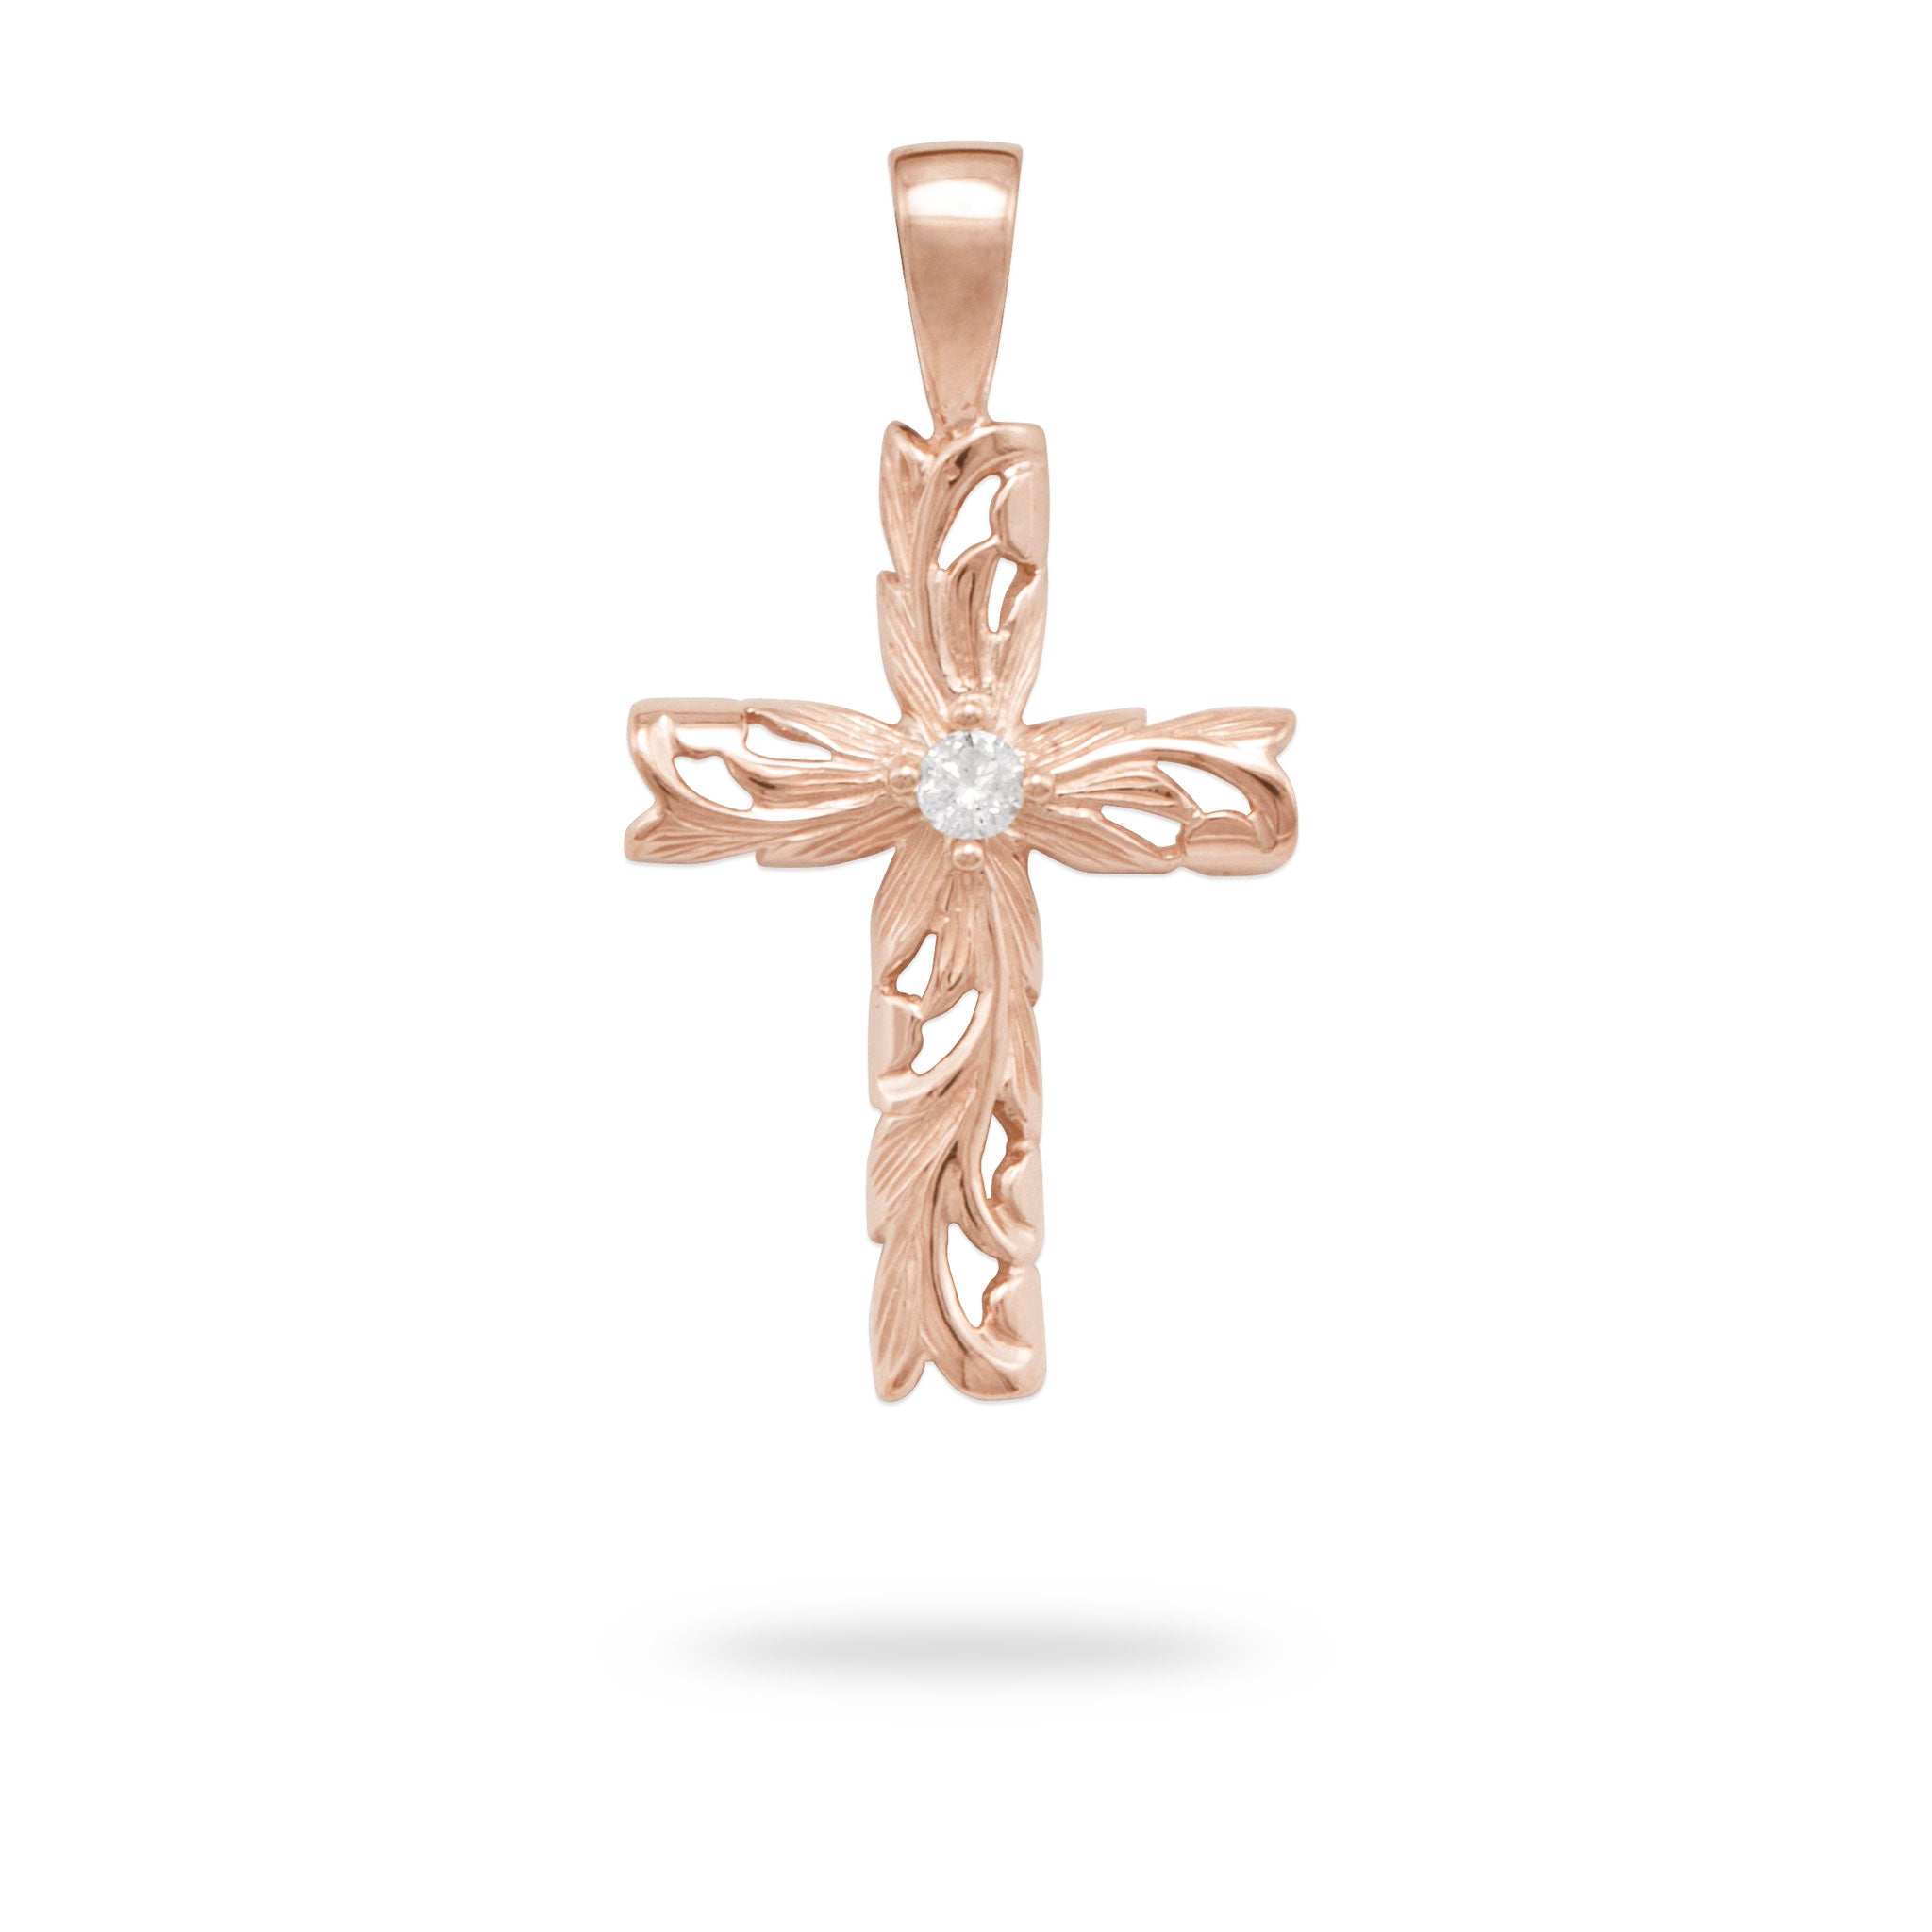 Hawaiian Heirloom Old English Scroll Cross Pendant with Diamond in Rose Gold - Medium-Maui Divers Jewelry